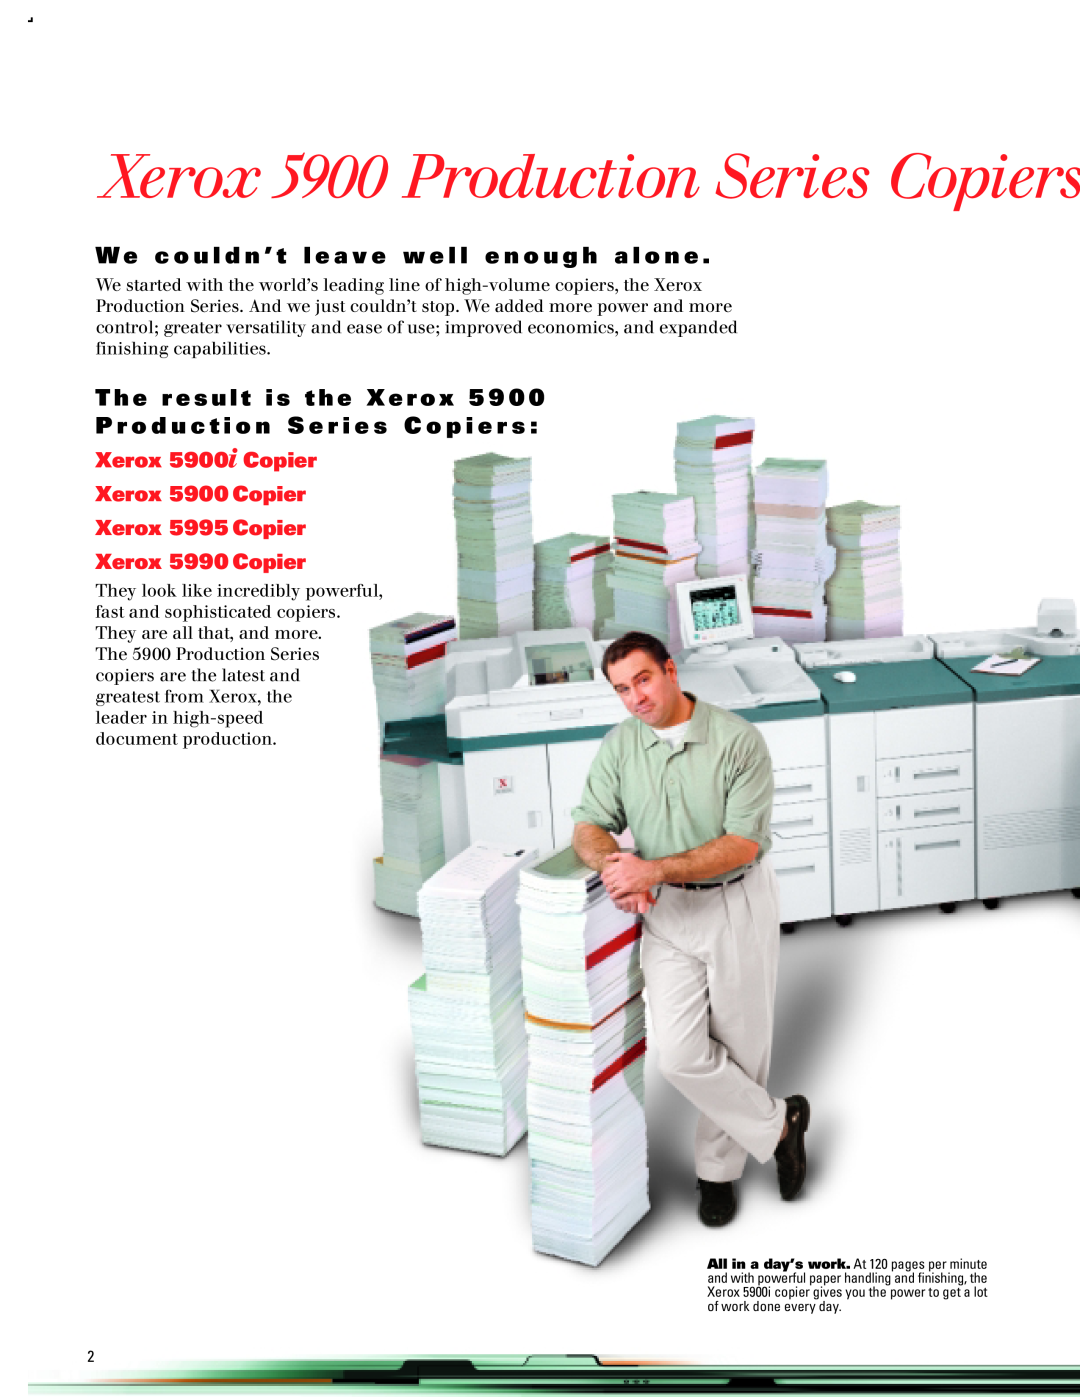 Xerox manual Xerox 5900 Production Series Copiers, T h e r e s u l t i s t h e X e r o x 5 9 0 